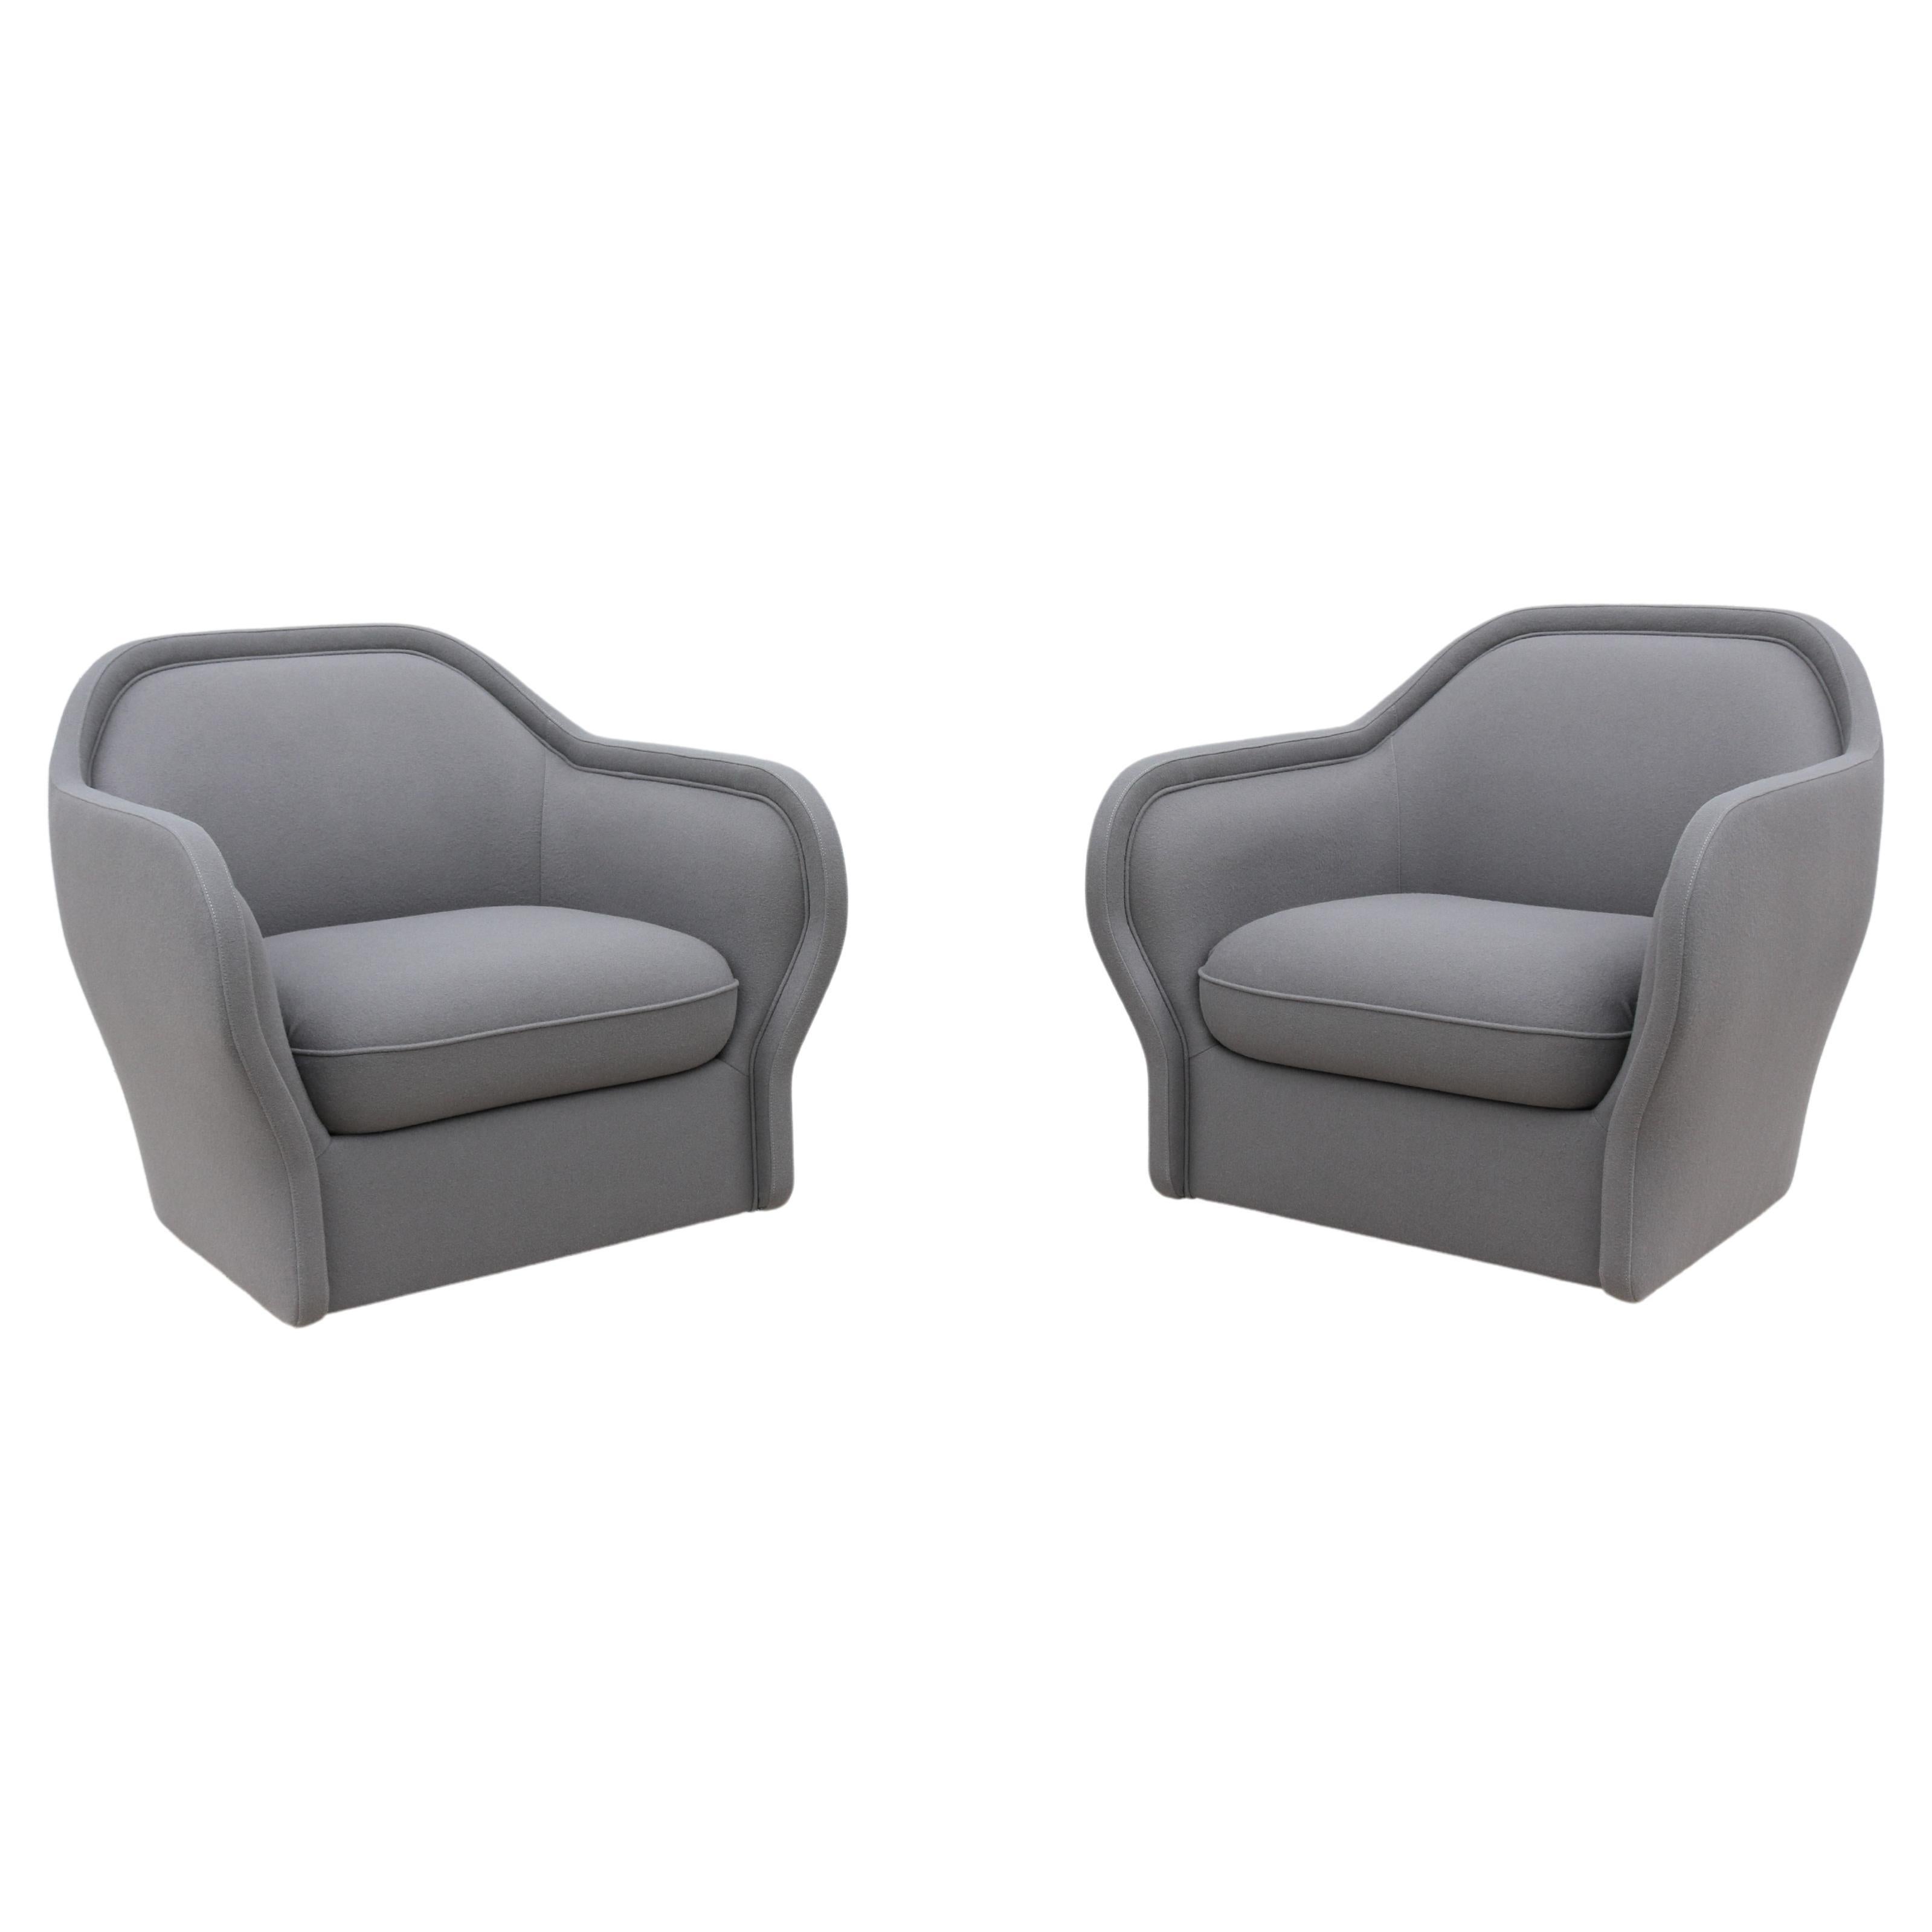 Modern Jaime Hayon for Bernhardt Design Bardot Gray Lounge Chairs, a Pair